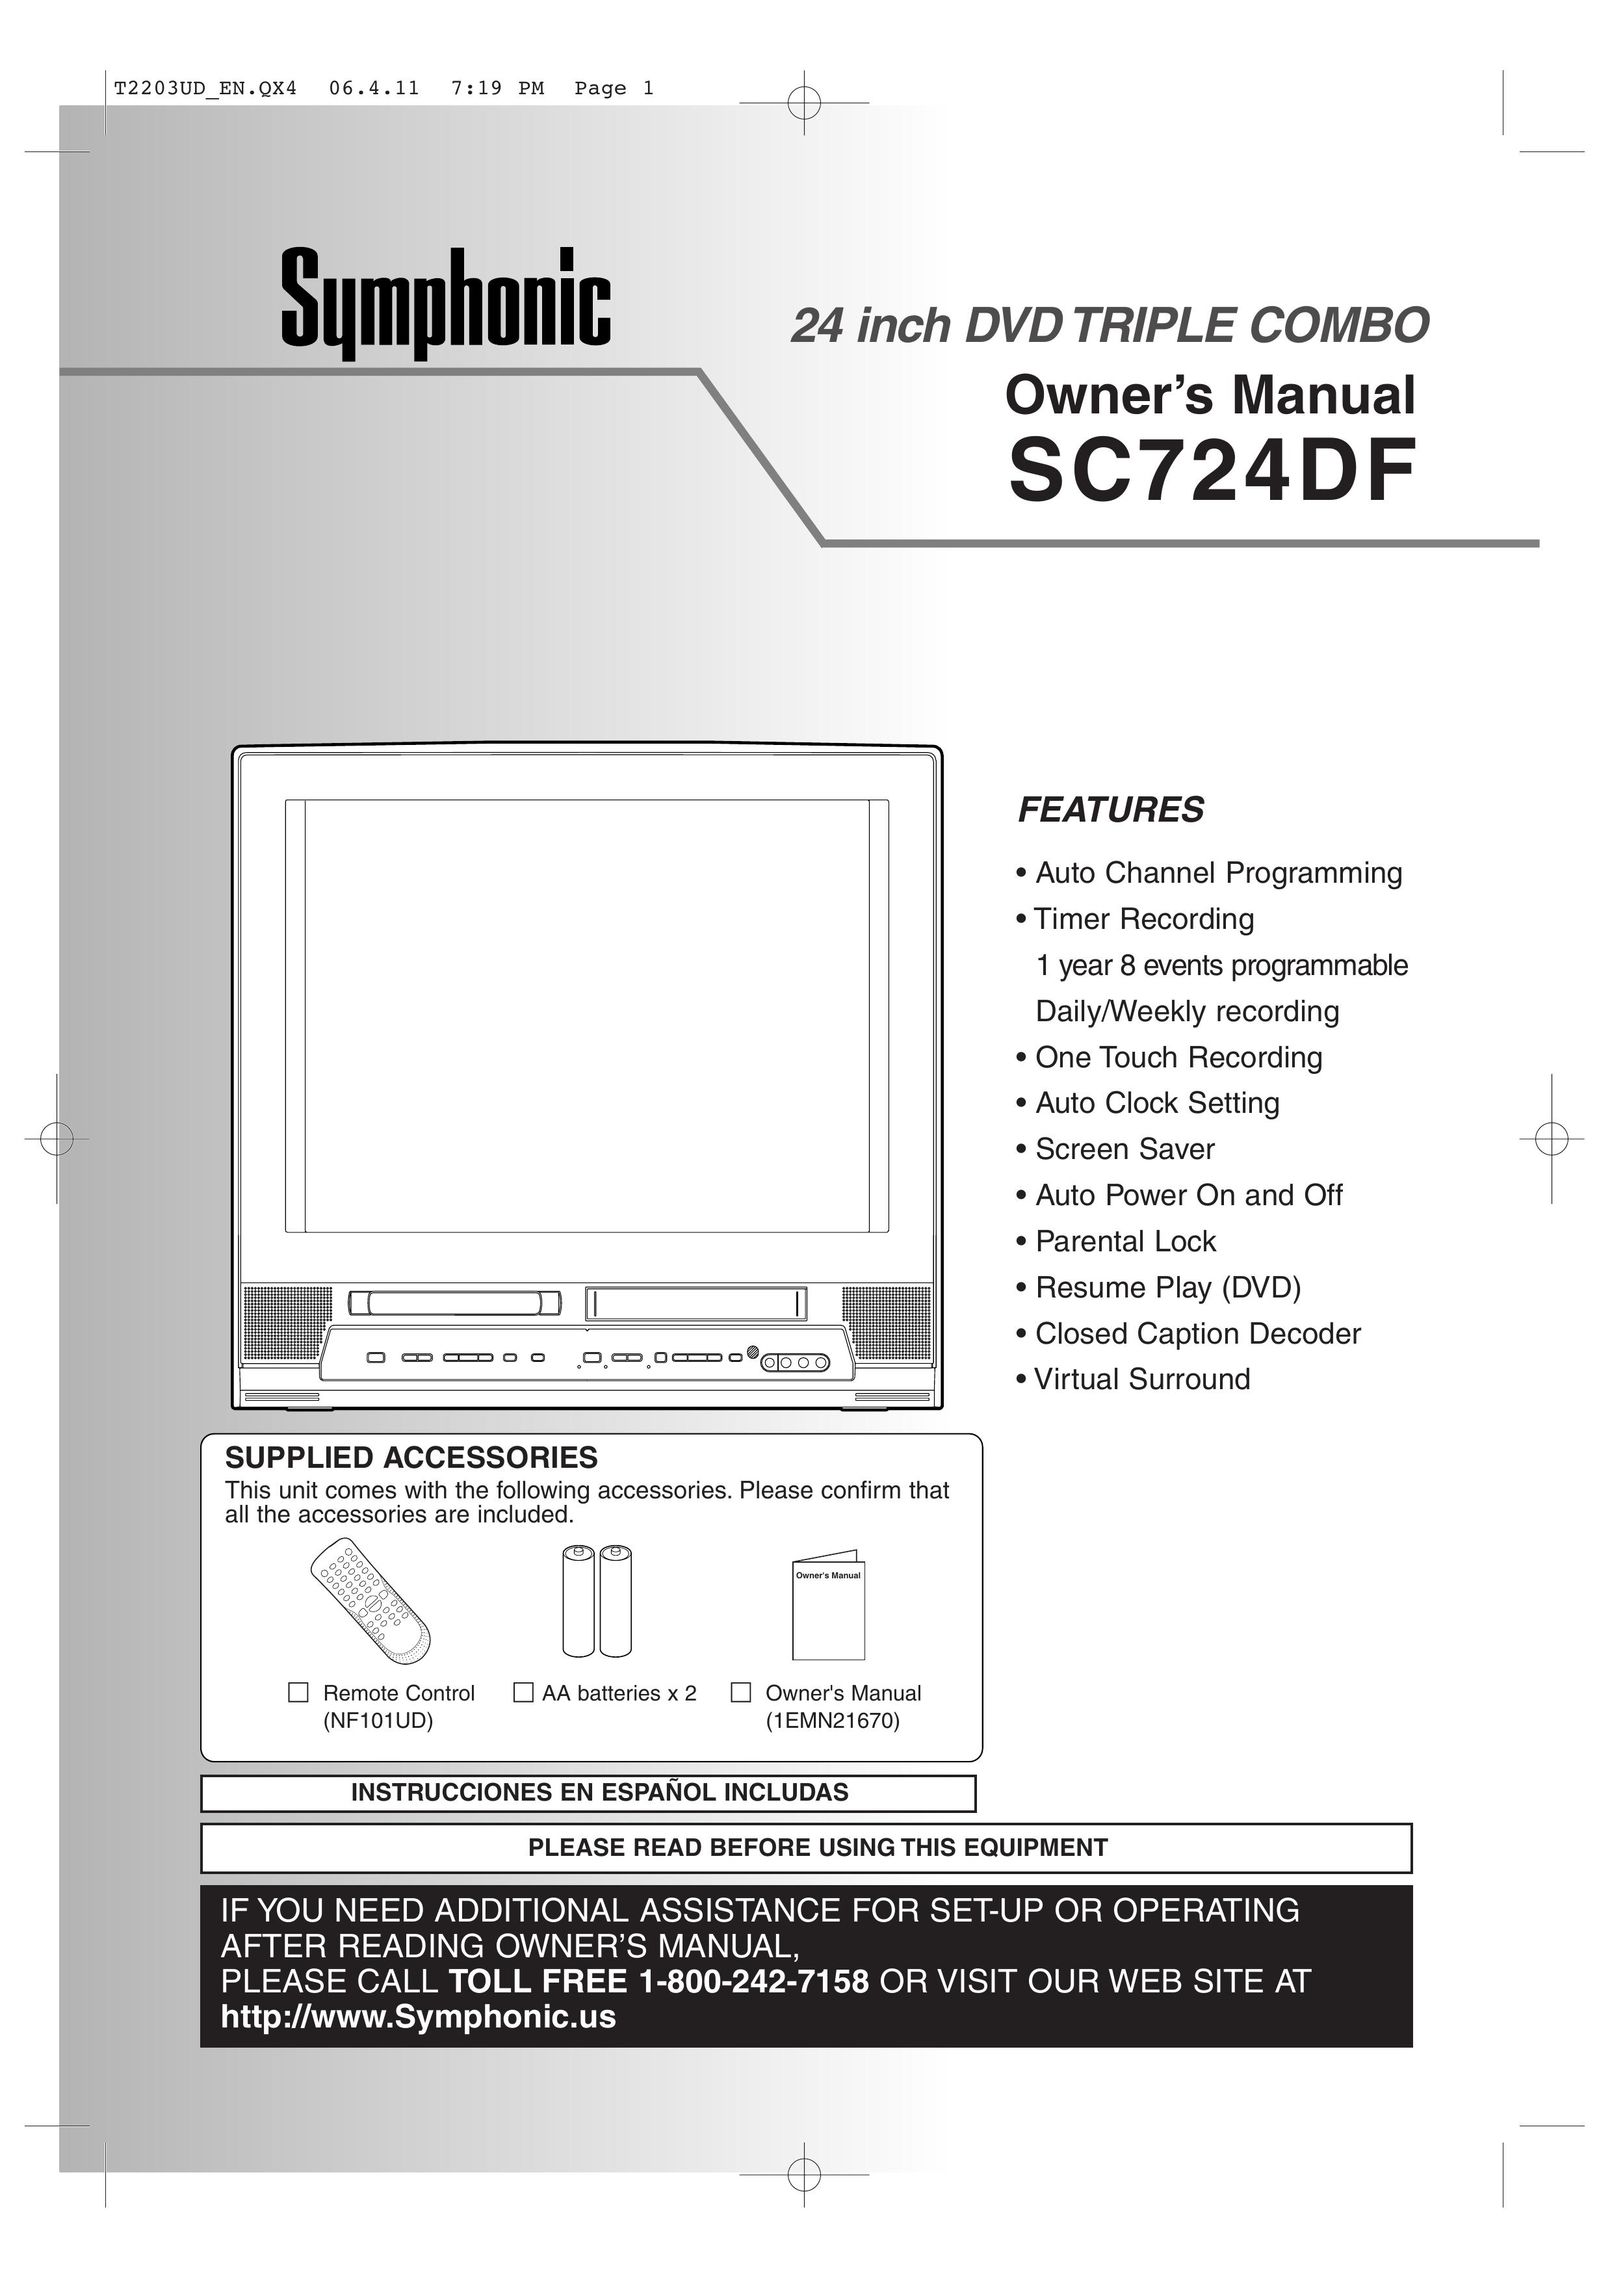 Symphonic SC724DF TV DVD Combo User Manual